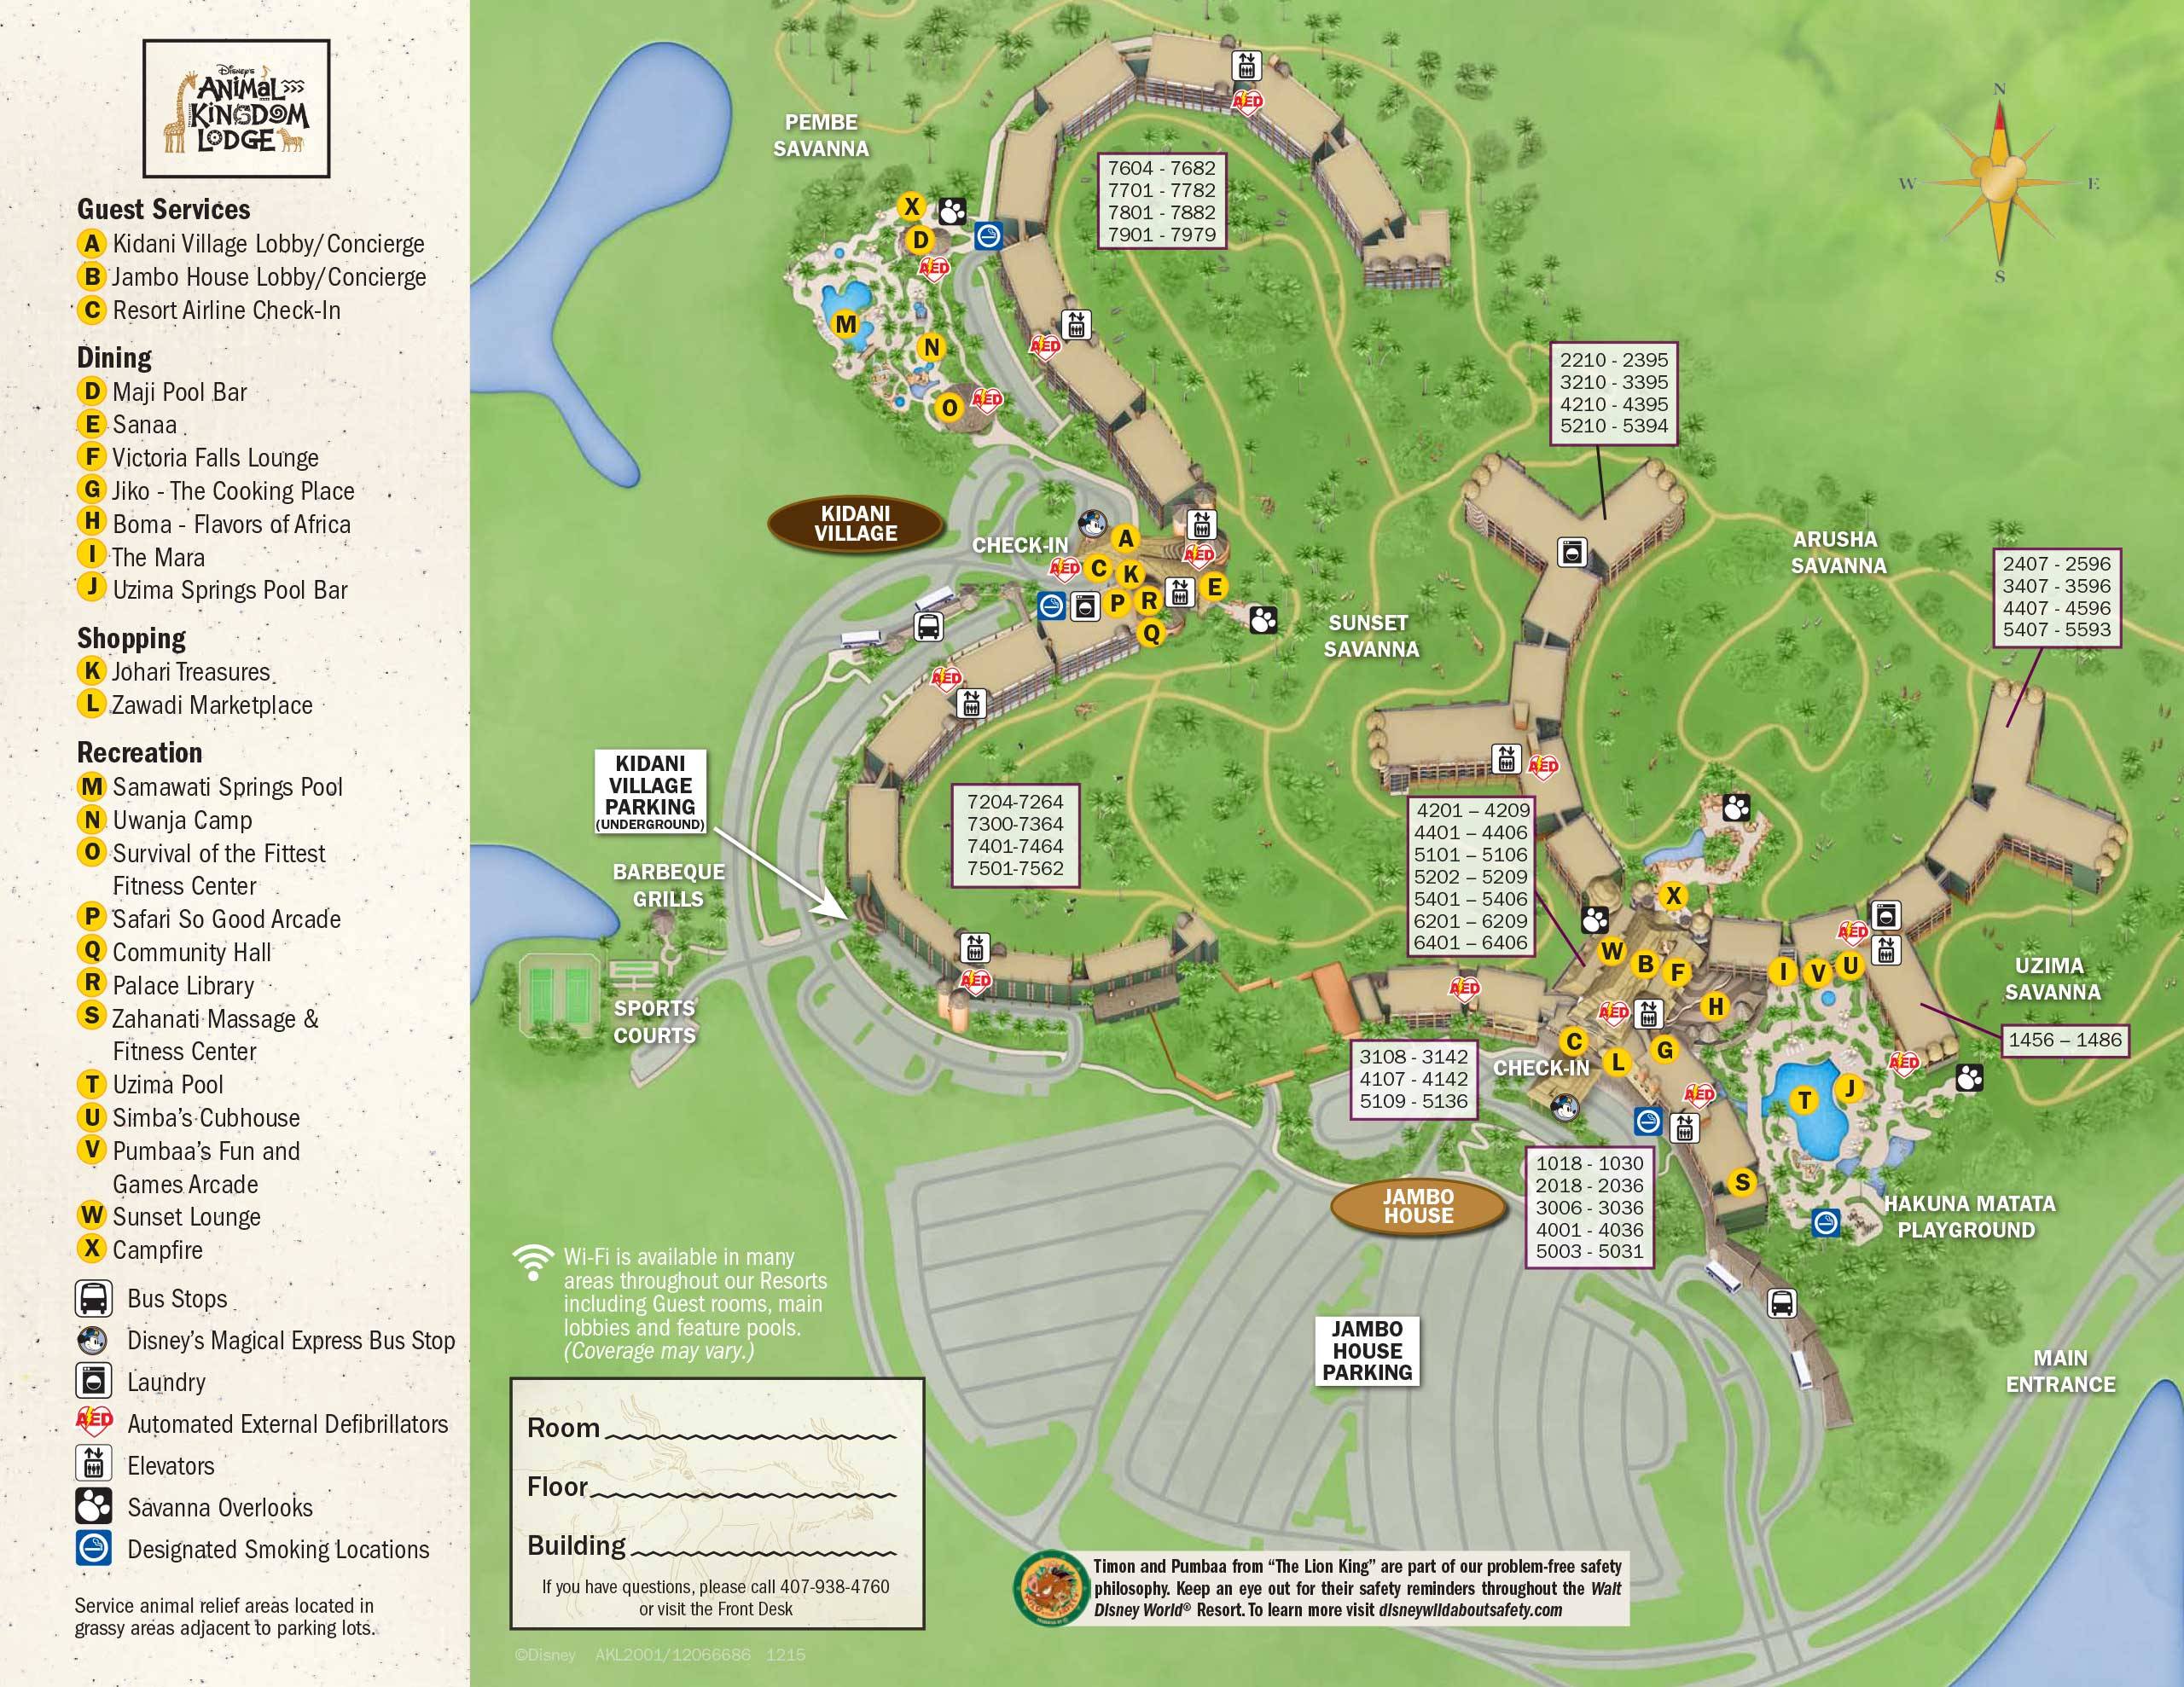 Disney's Animal Kingdom Lodge map